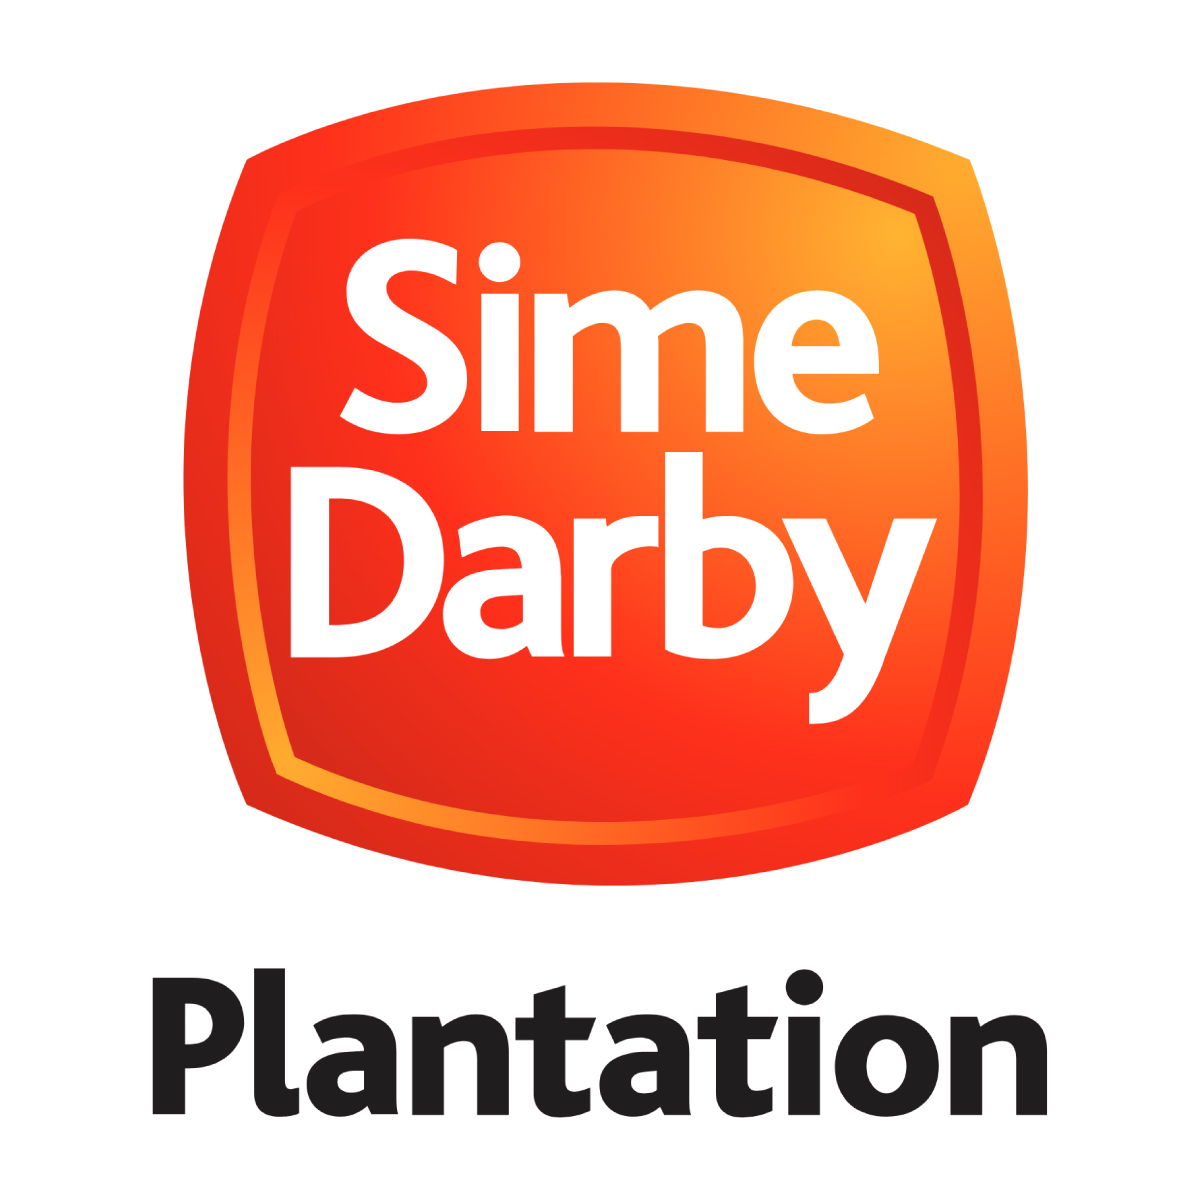 Sime Darby Plantation Worldwide